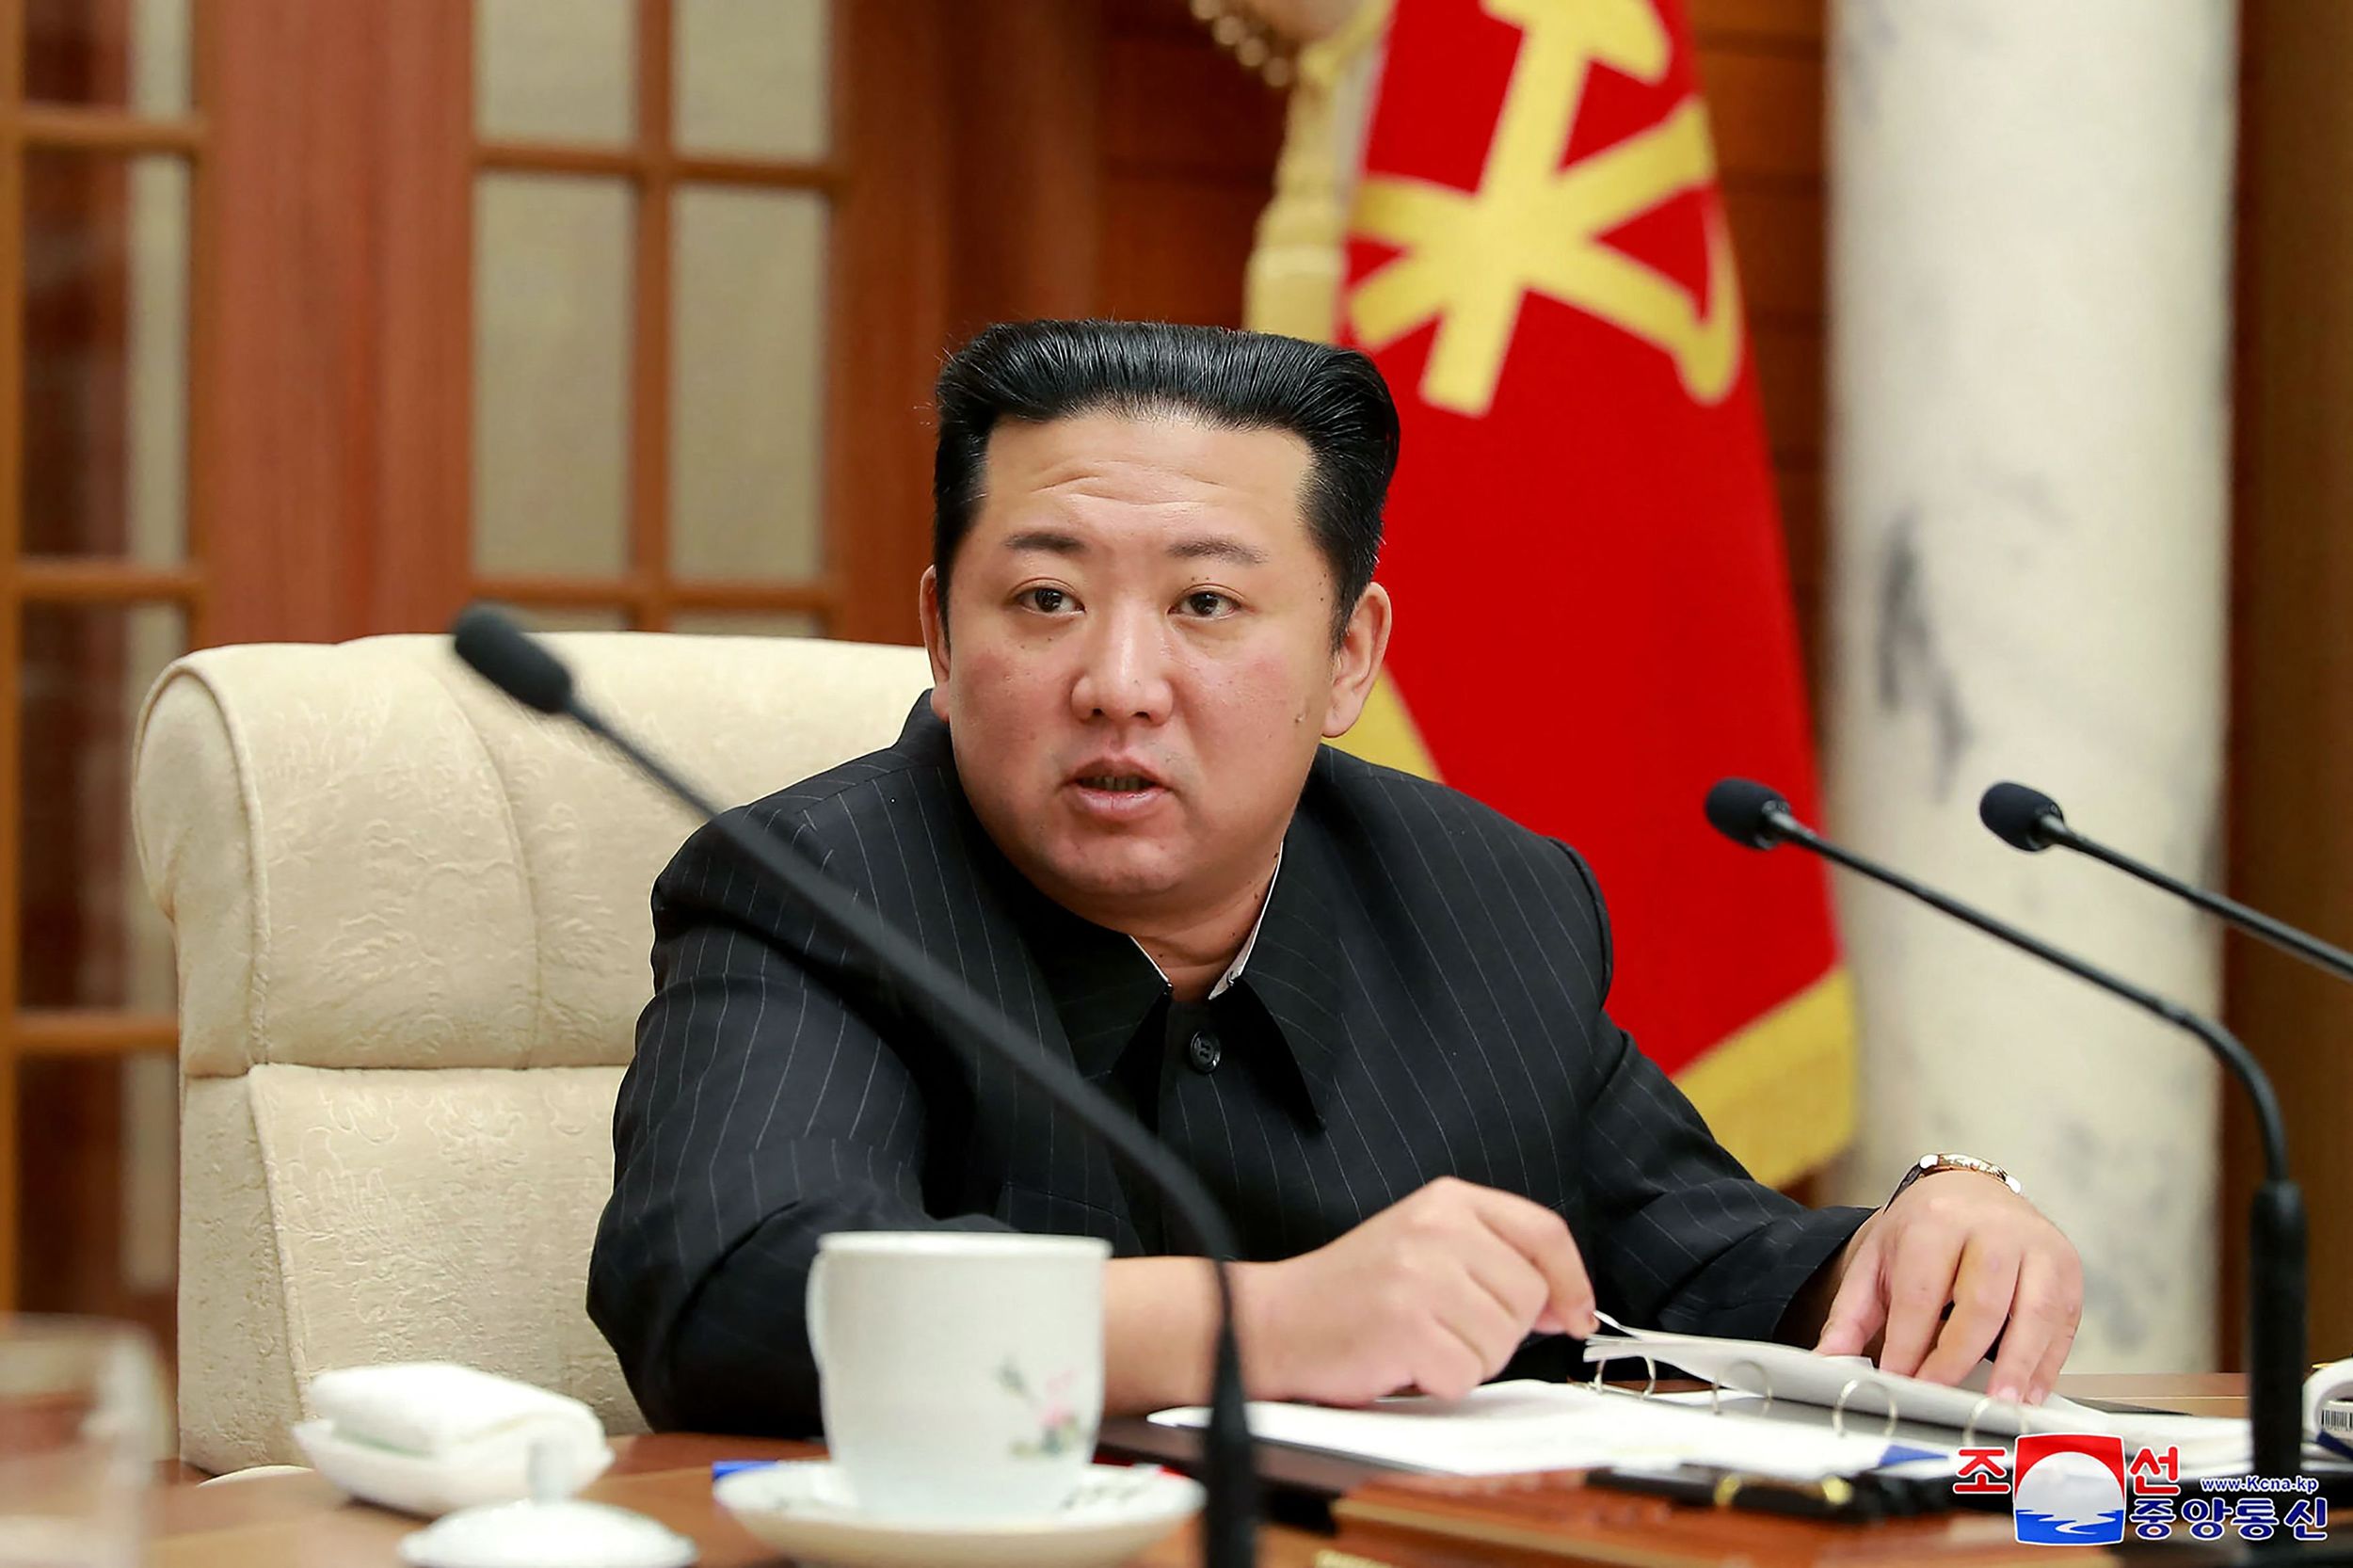 Kim Jong Un Net Worth, Age, Height, Parents, More